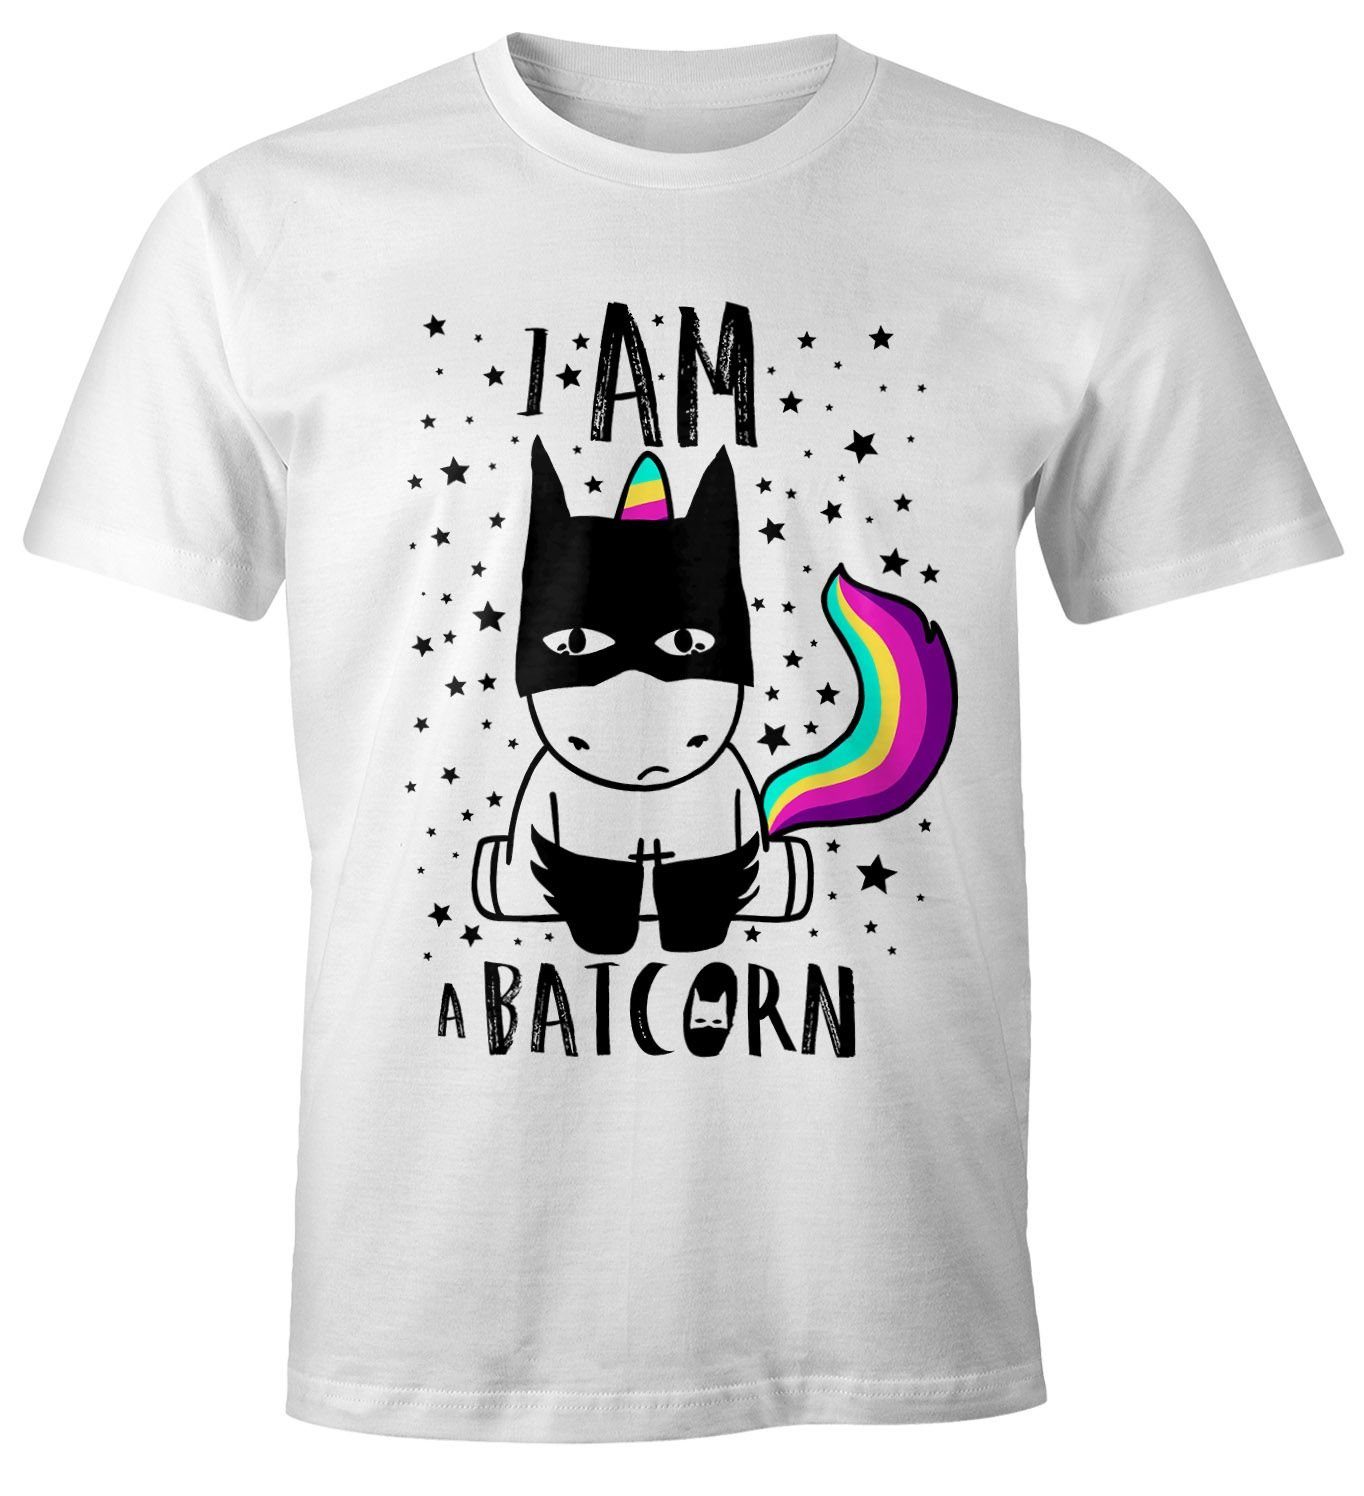 MoonWorks Print-Shirt Batcorn Shirt Herren Einhorn Unicorn Fun-Shirt Moonworks® mit Print weiß